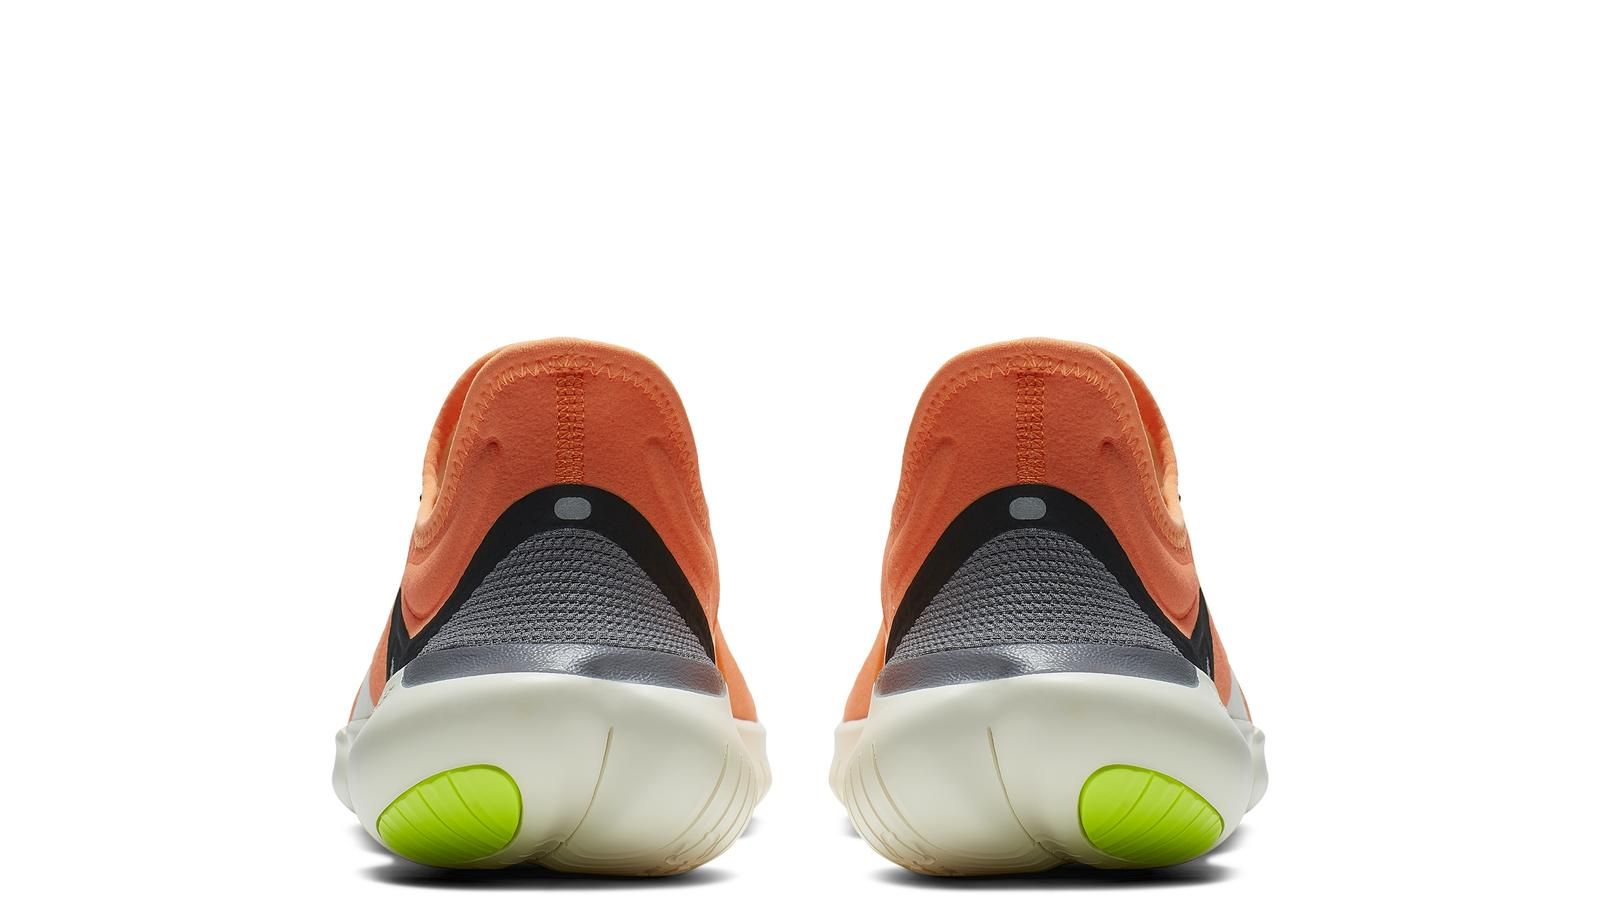 Nike Free Run Flyknit 3.0 and Nike Free Run 5.0 | Shoe Releases